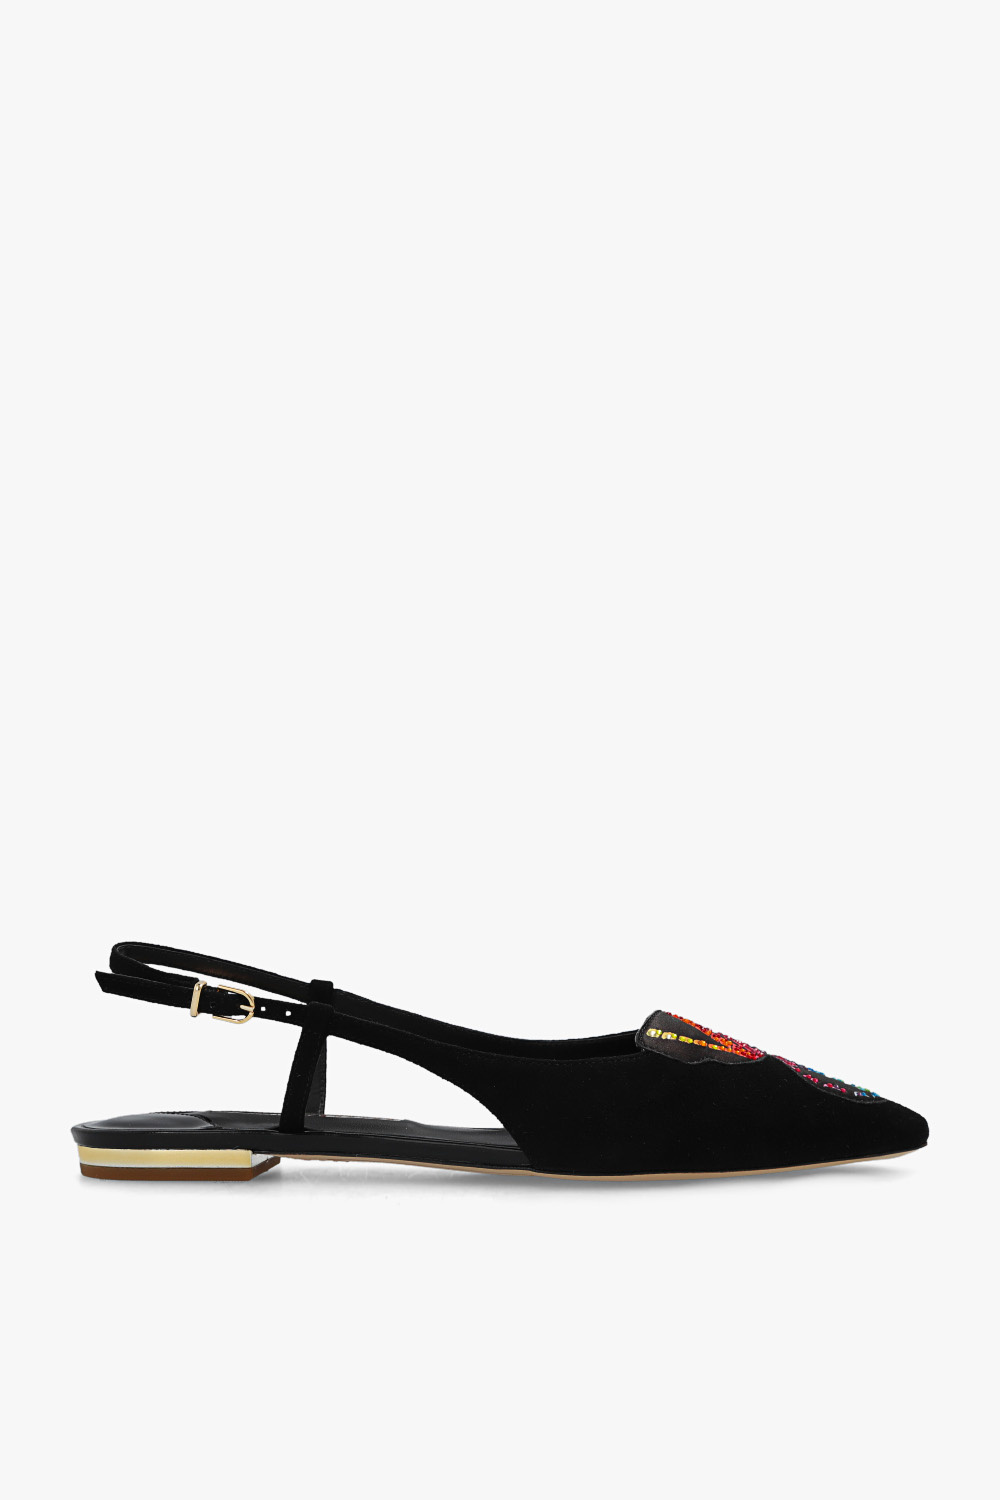 Sophia Webster ‘Butterfly’ suede shoes